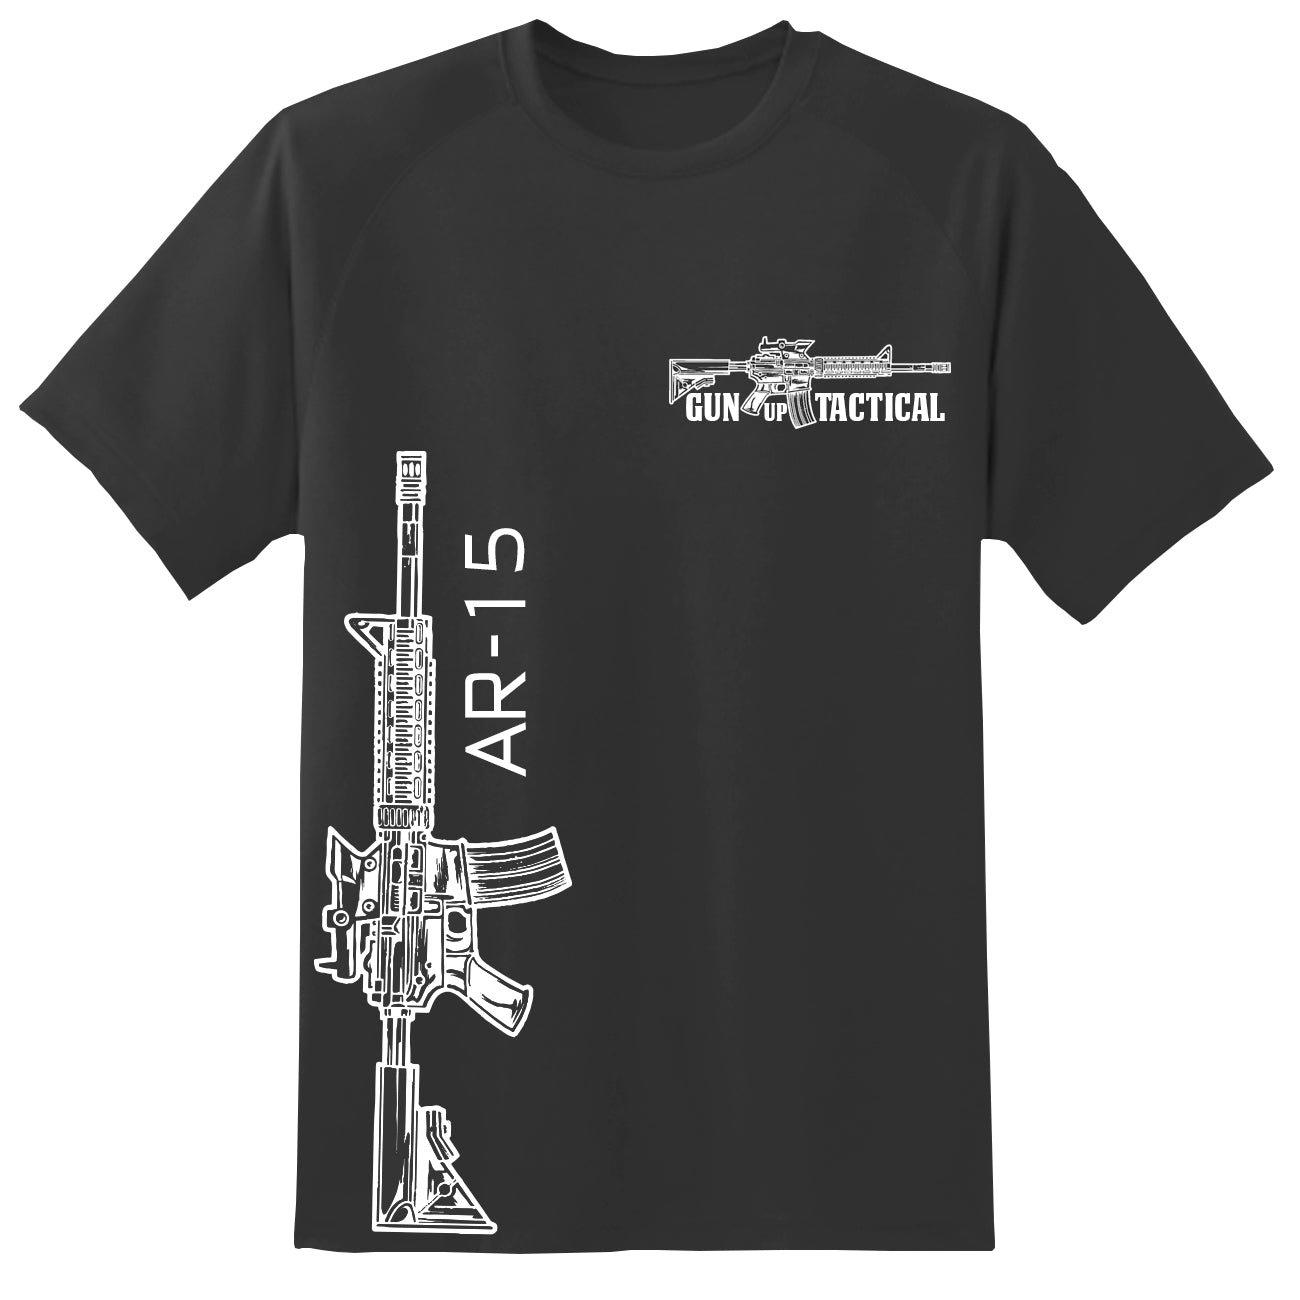 AR-15 T-Shirt - Gun Up Tactical